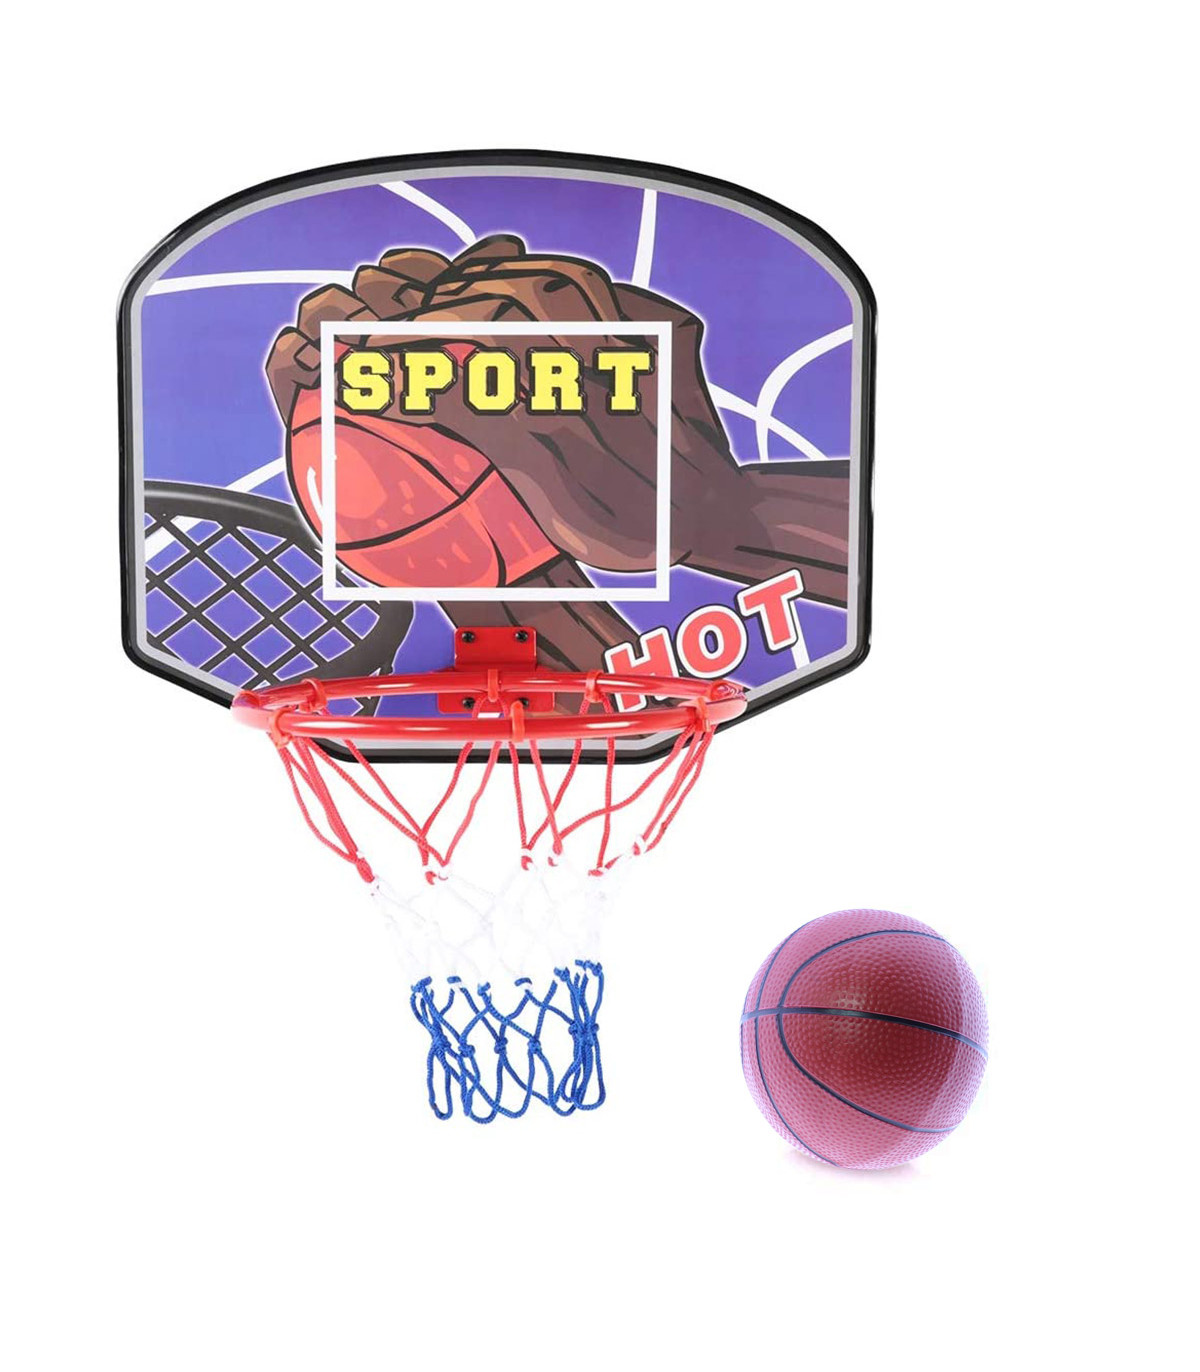 Comprar Canasta baloncesto infantil - Tablero baloncesto pared en